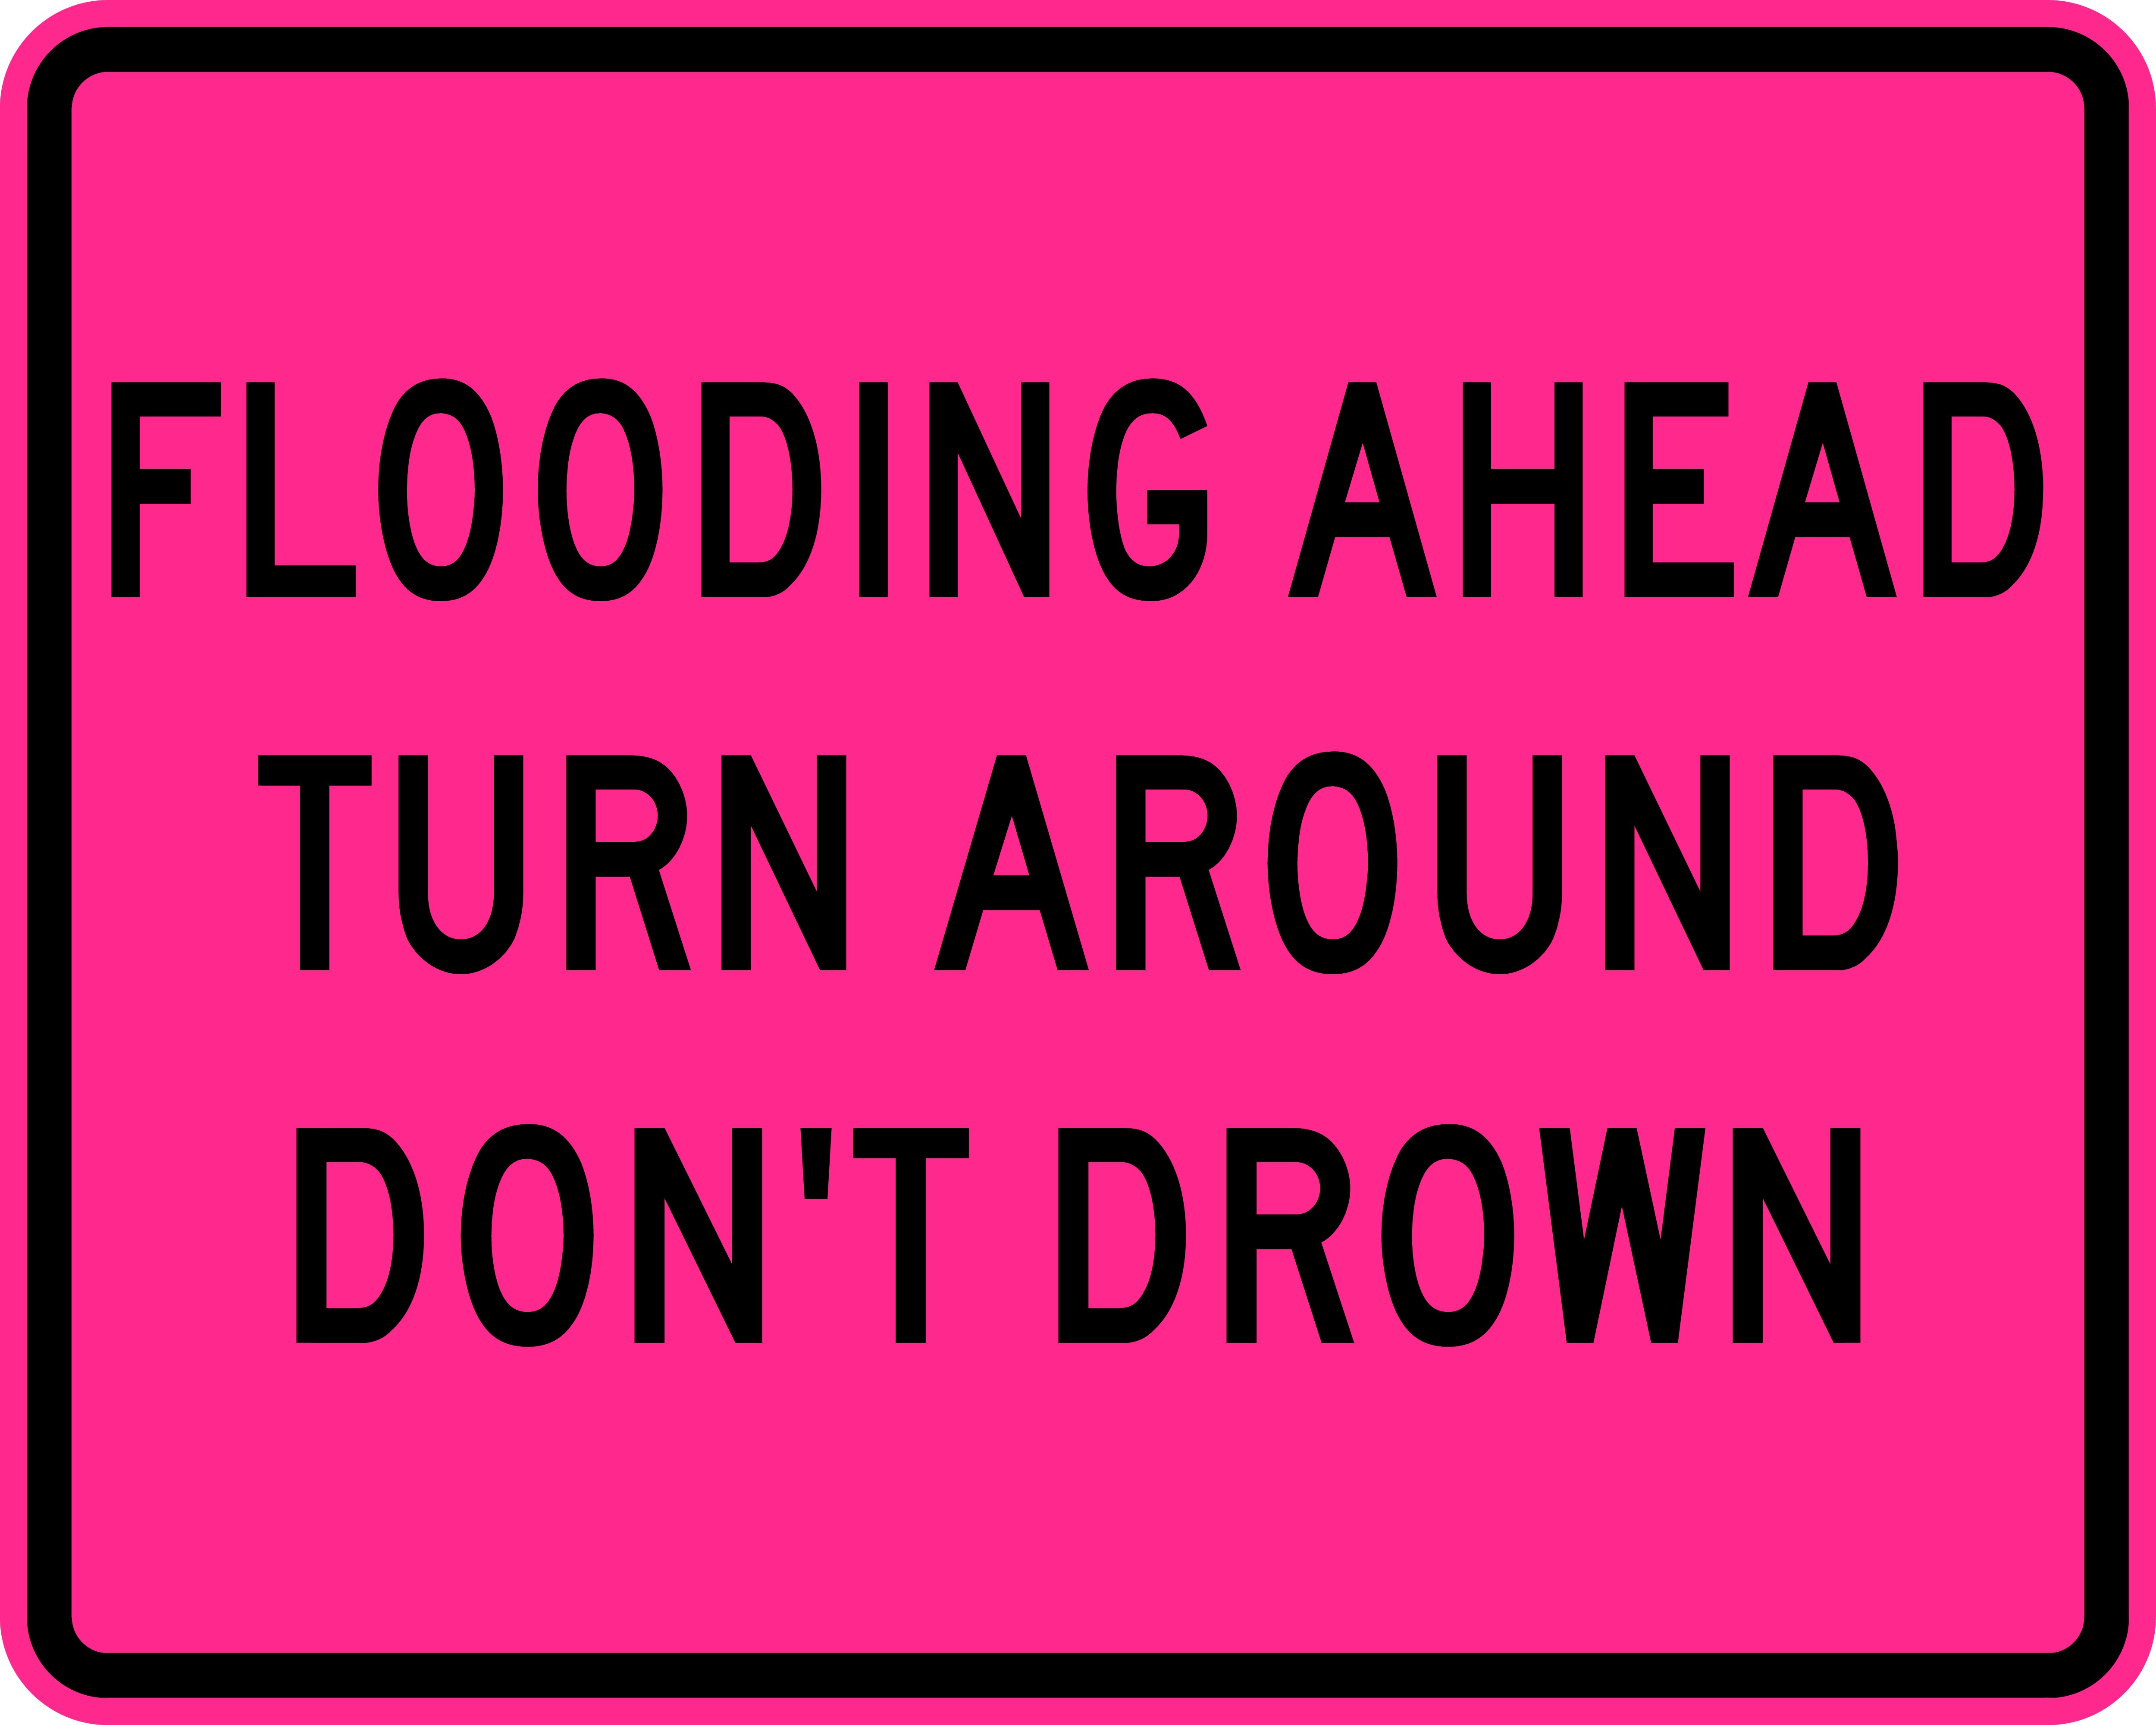 Turn Around Don't Drown